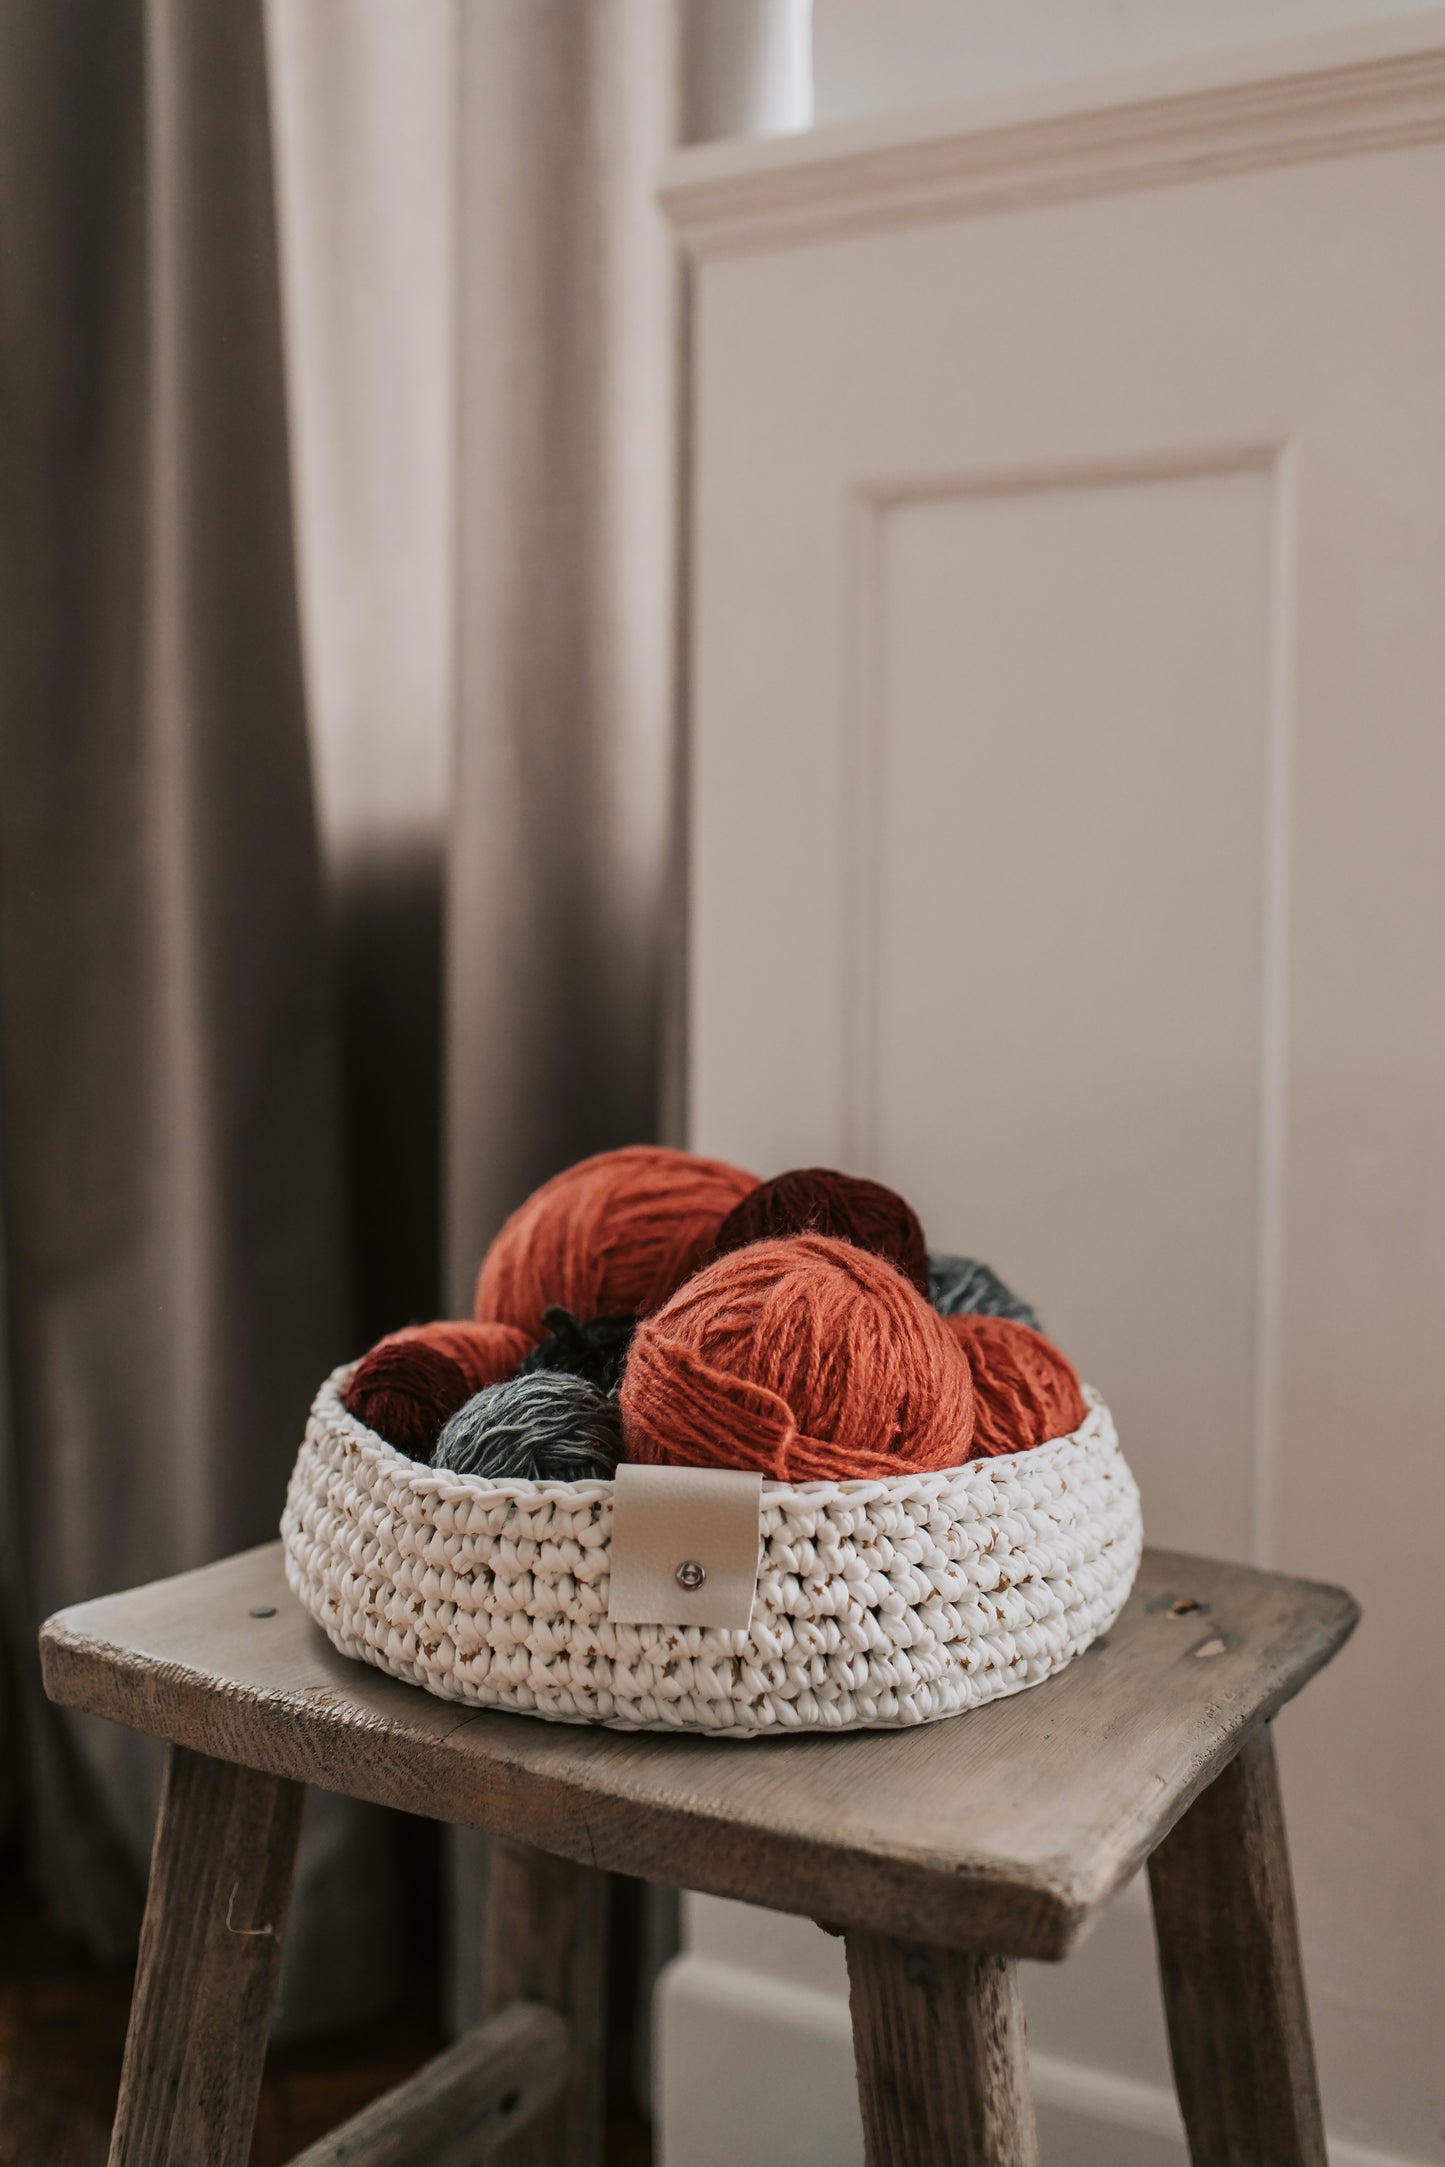 Crochet your own Basket!